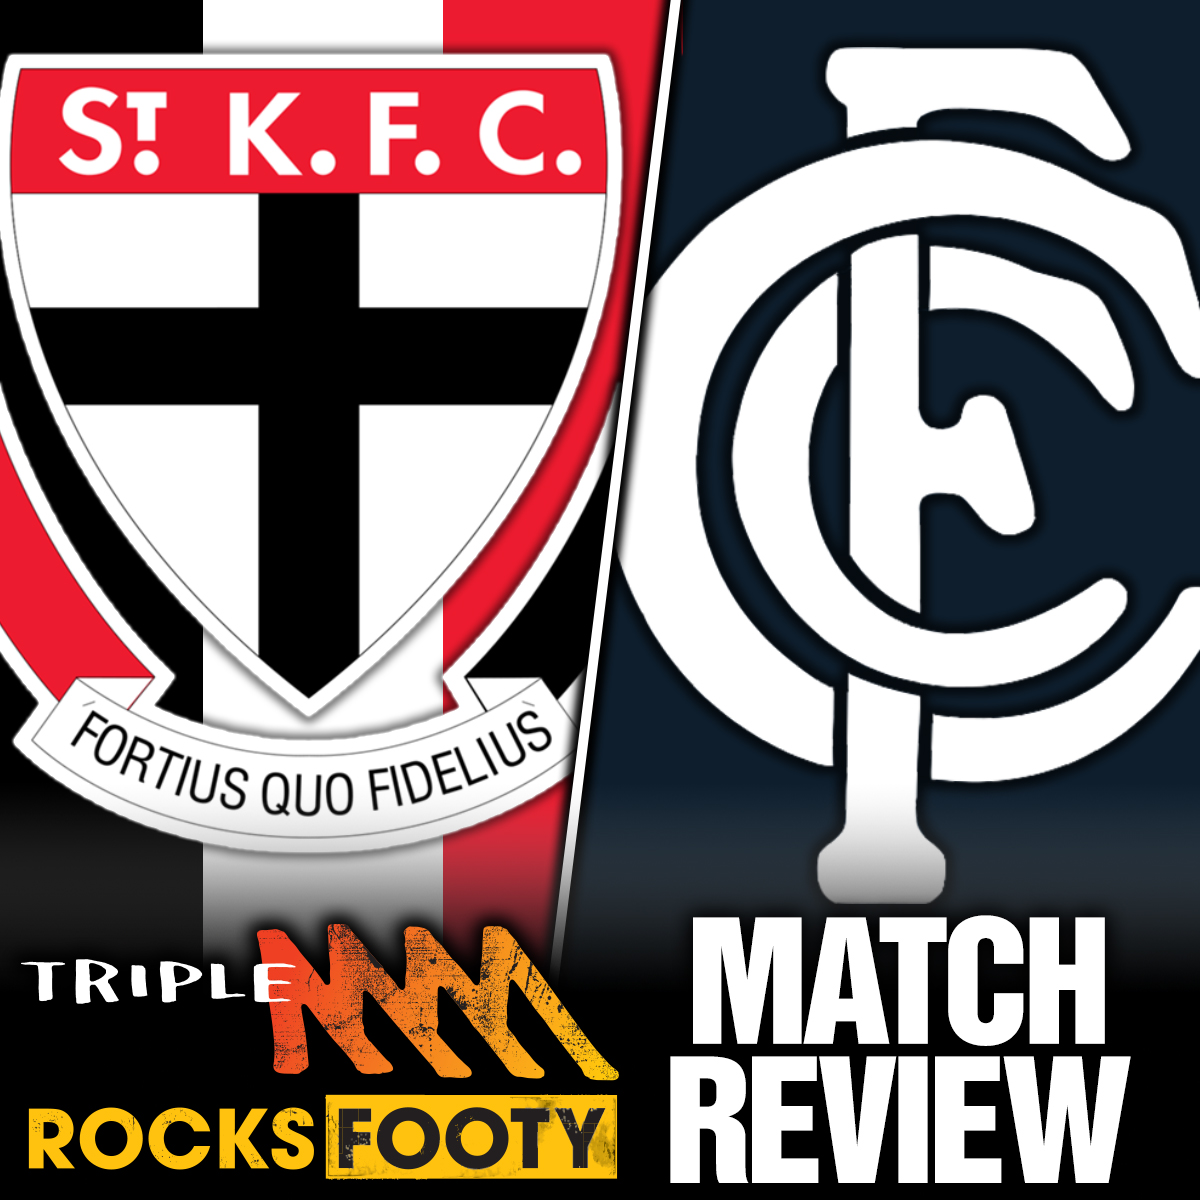 St Kilda vs Carlton match review